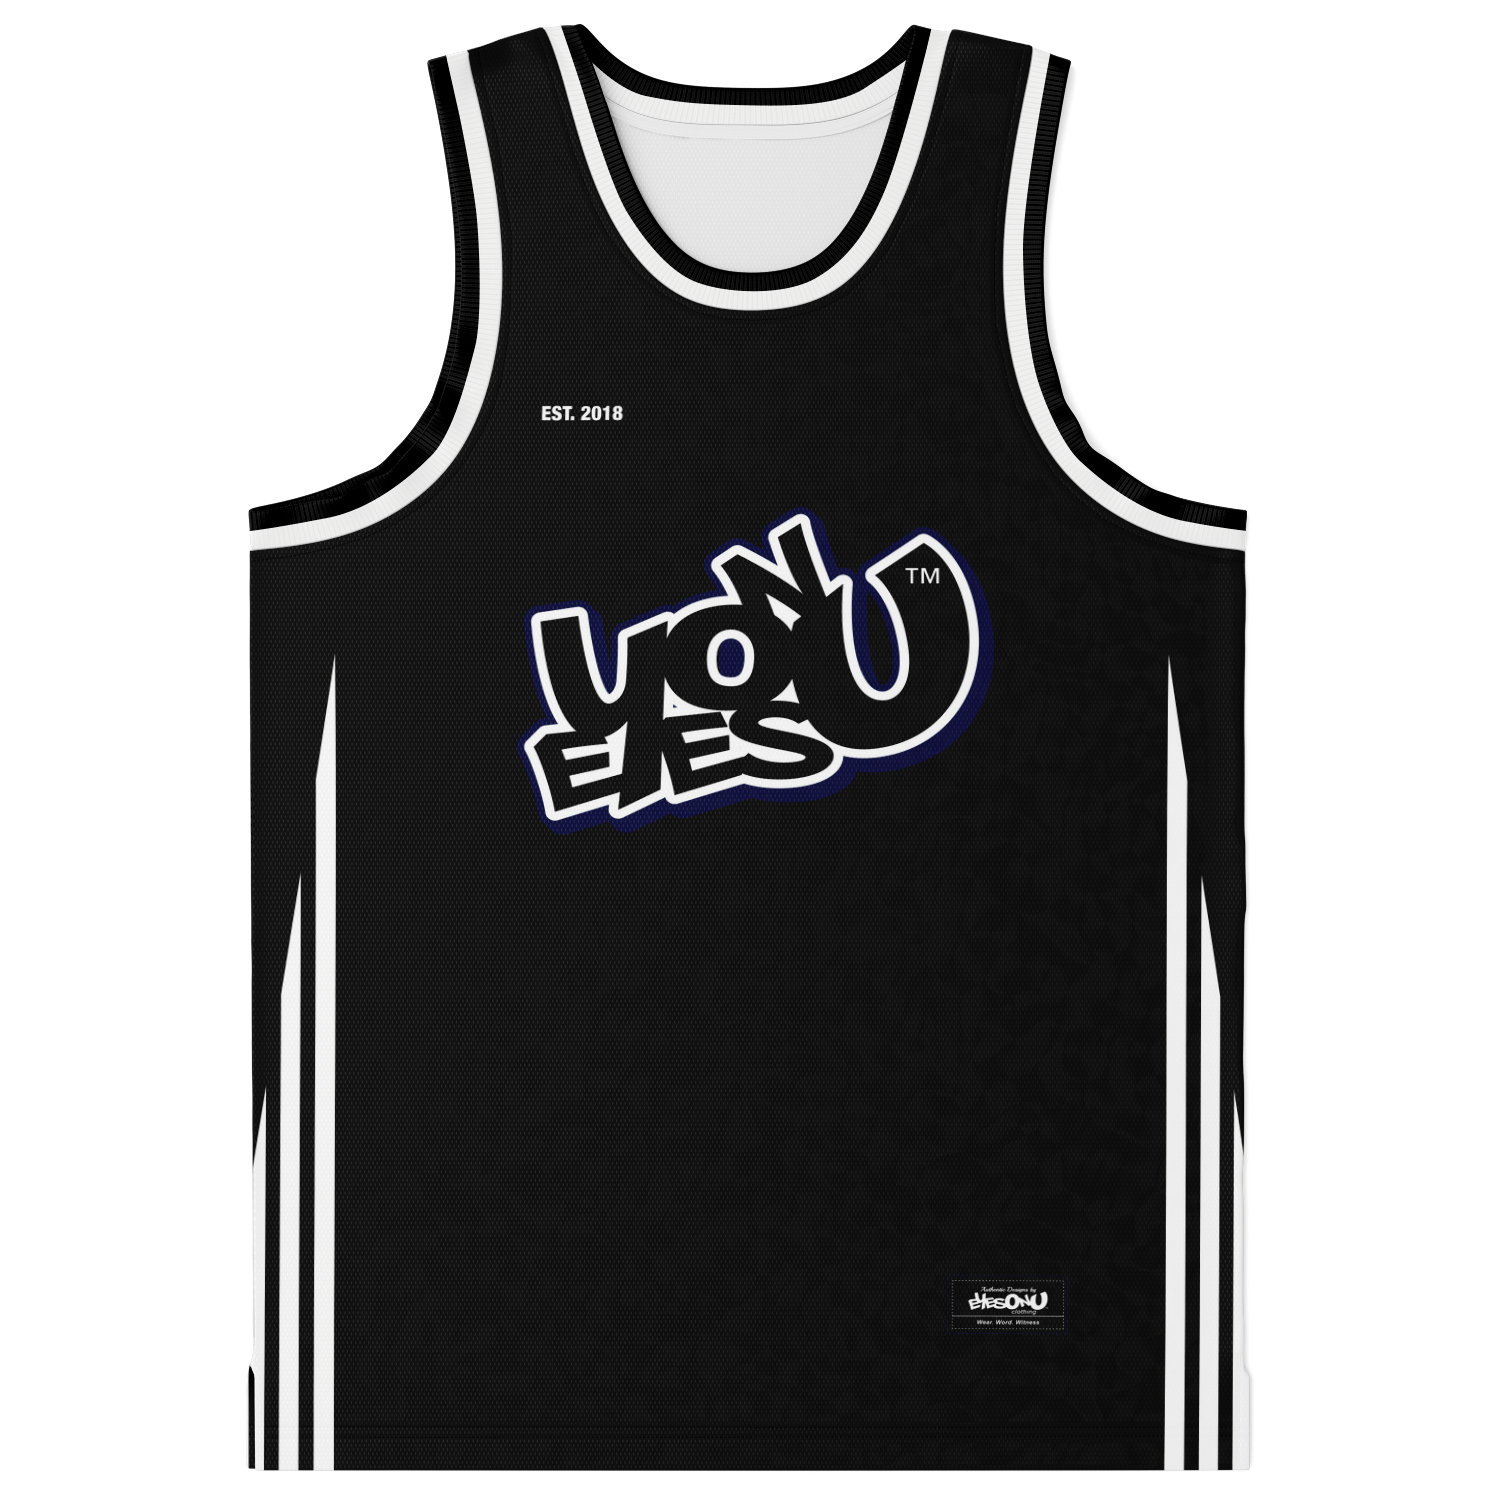 EOYC Black - Basketball Jersey